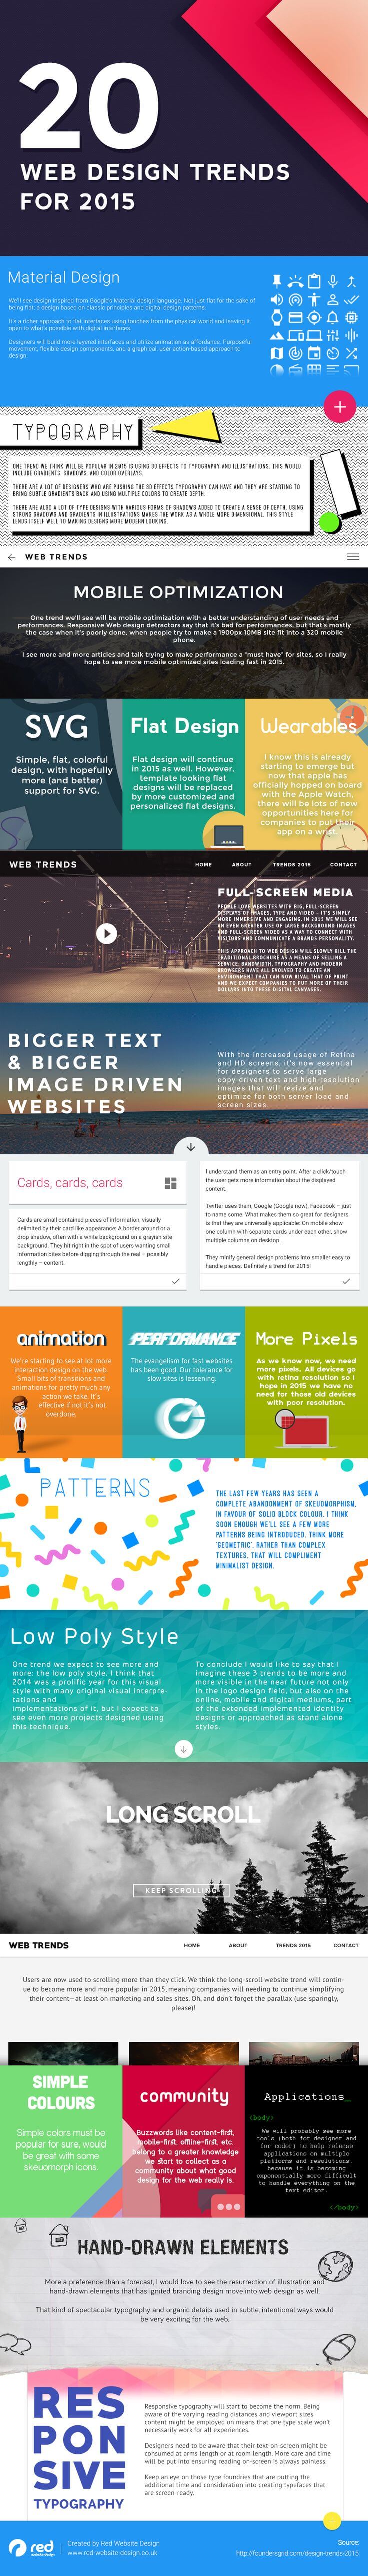 tendances-webdesign-2015-infographie